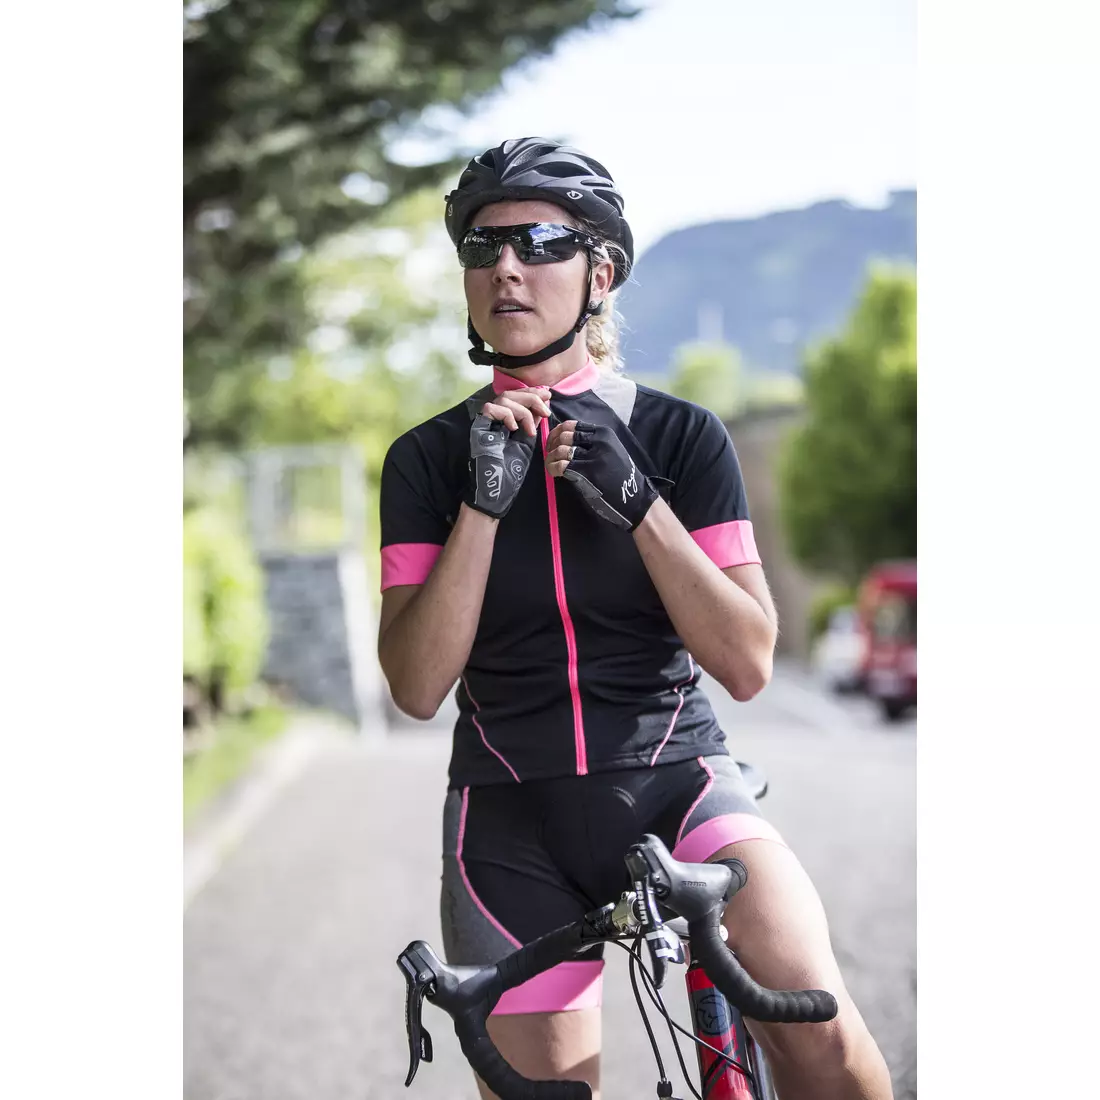 ROGELLI CARLYN - tricou de ciclism pentru femei 010.026, negru și roz